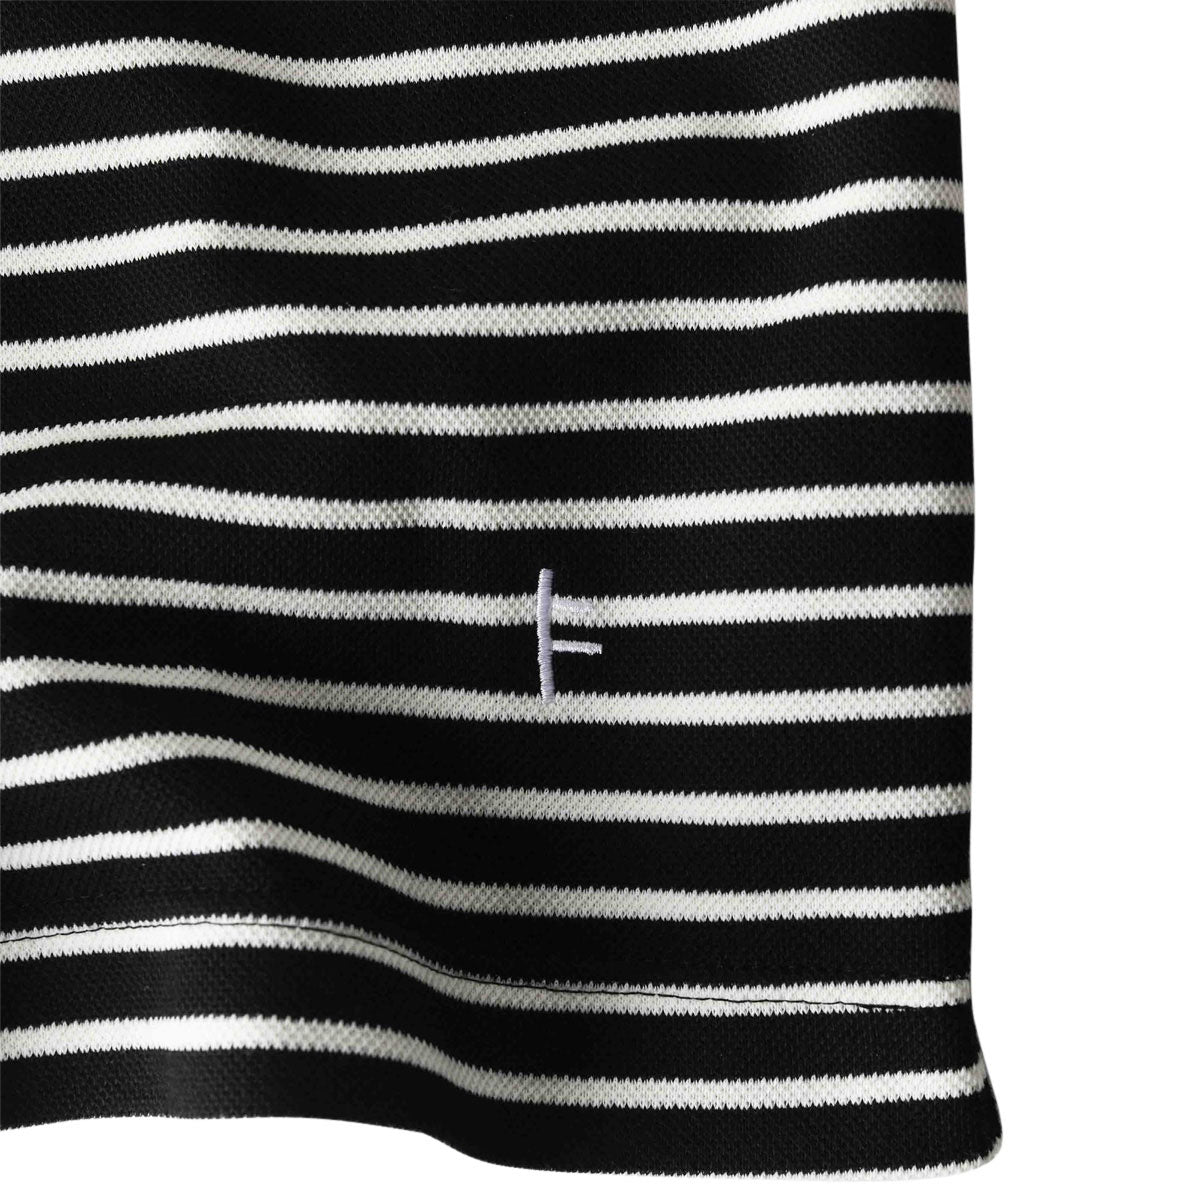 Former Uniform Striped Polo Shirt - Worn Black/White image 4